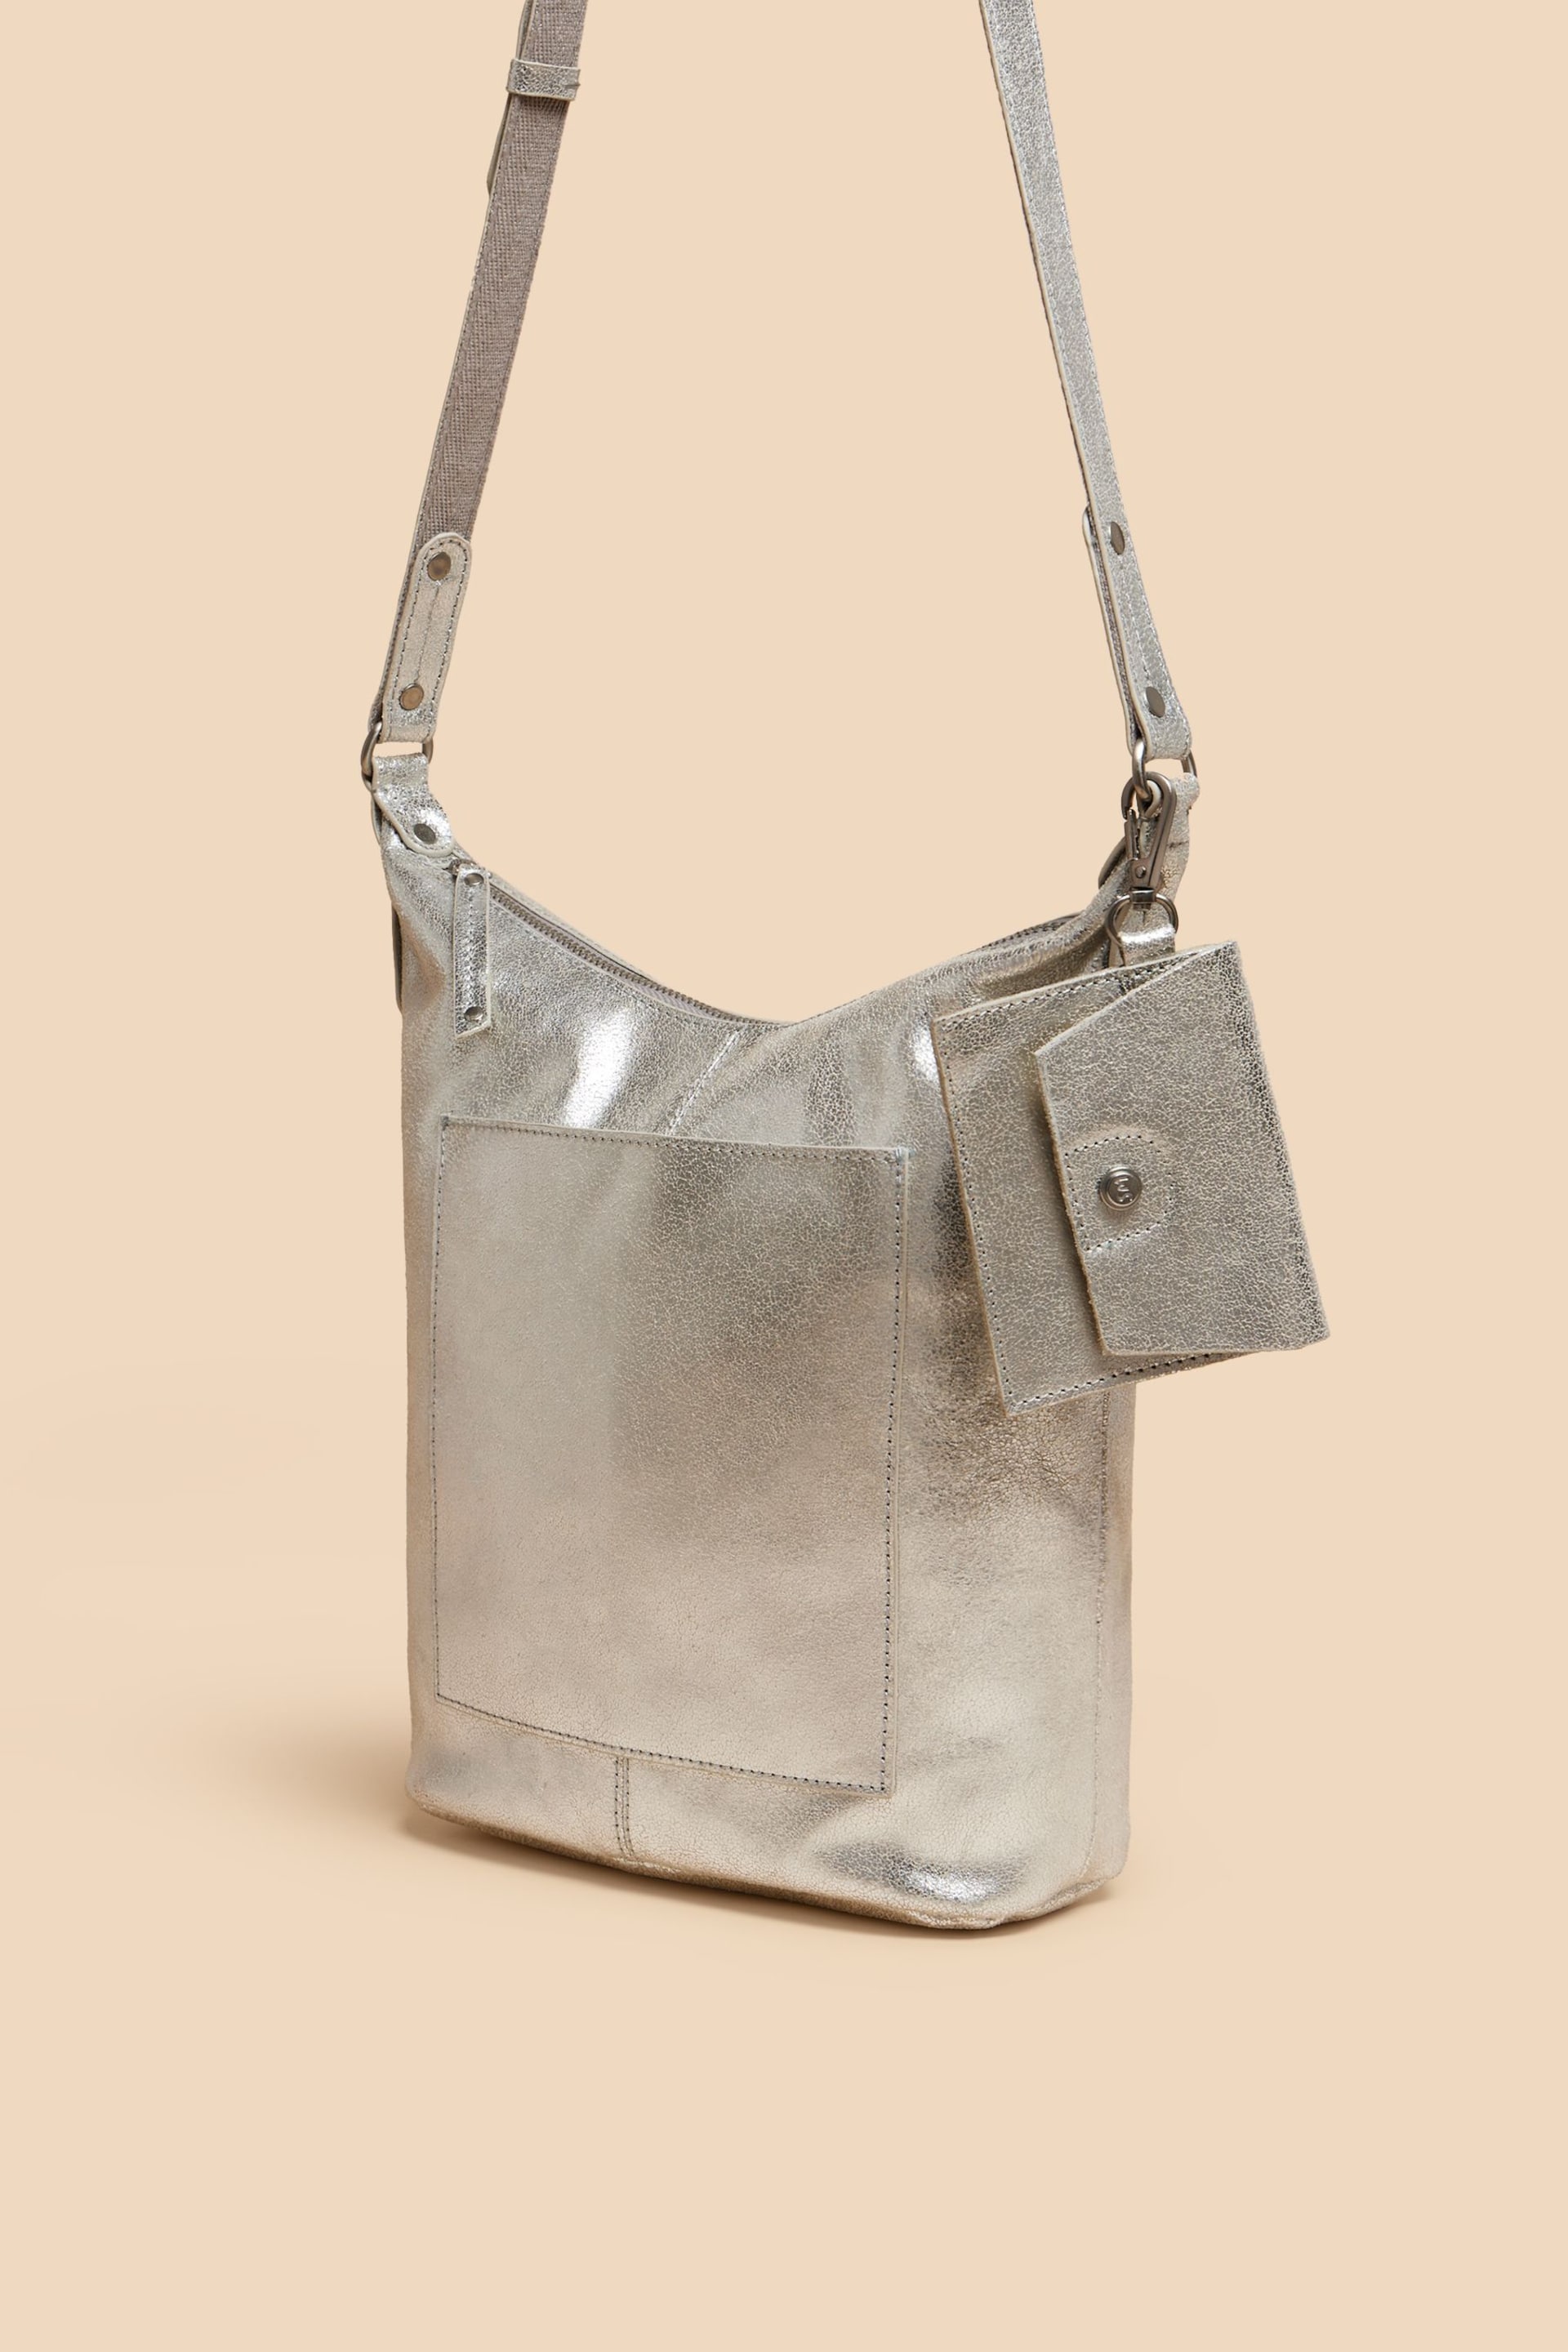 White Stuff Silver Fern Leather Cross-Body Bag - Image 3 of 4